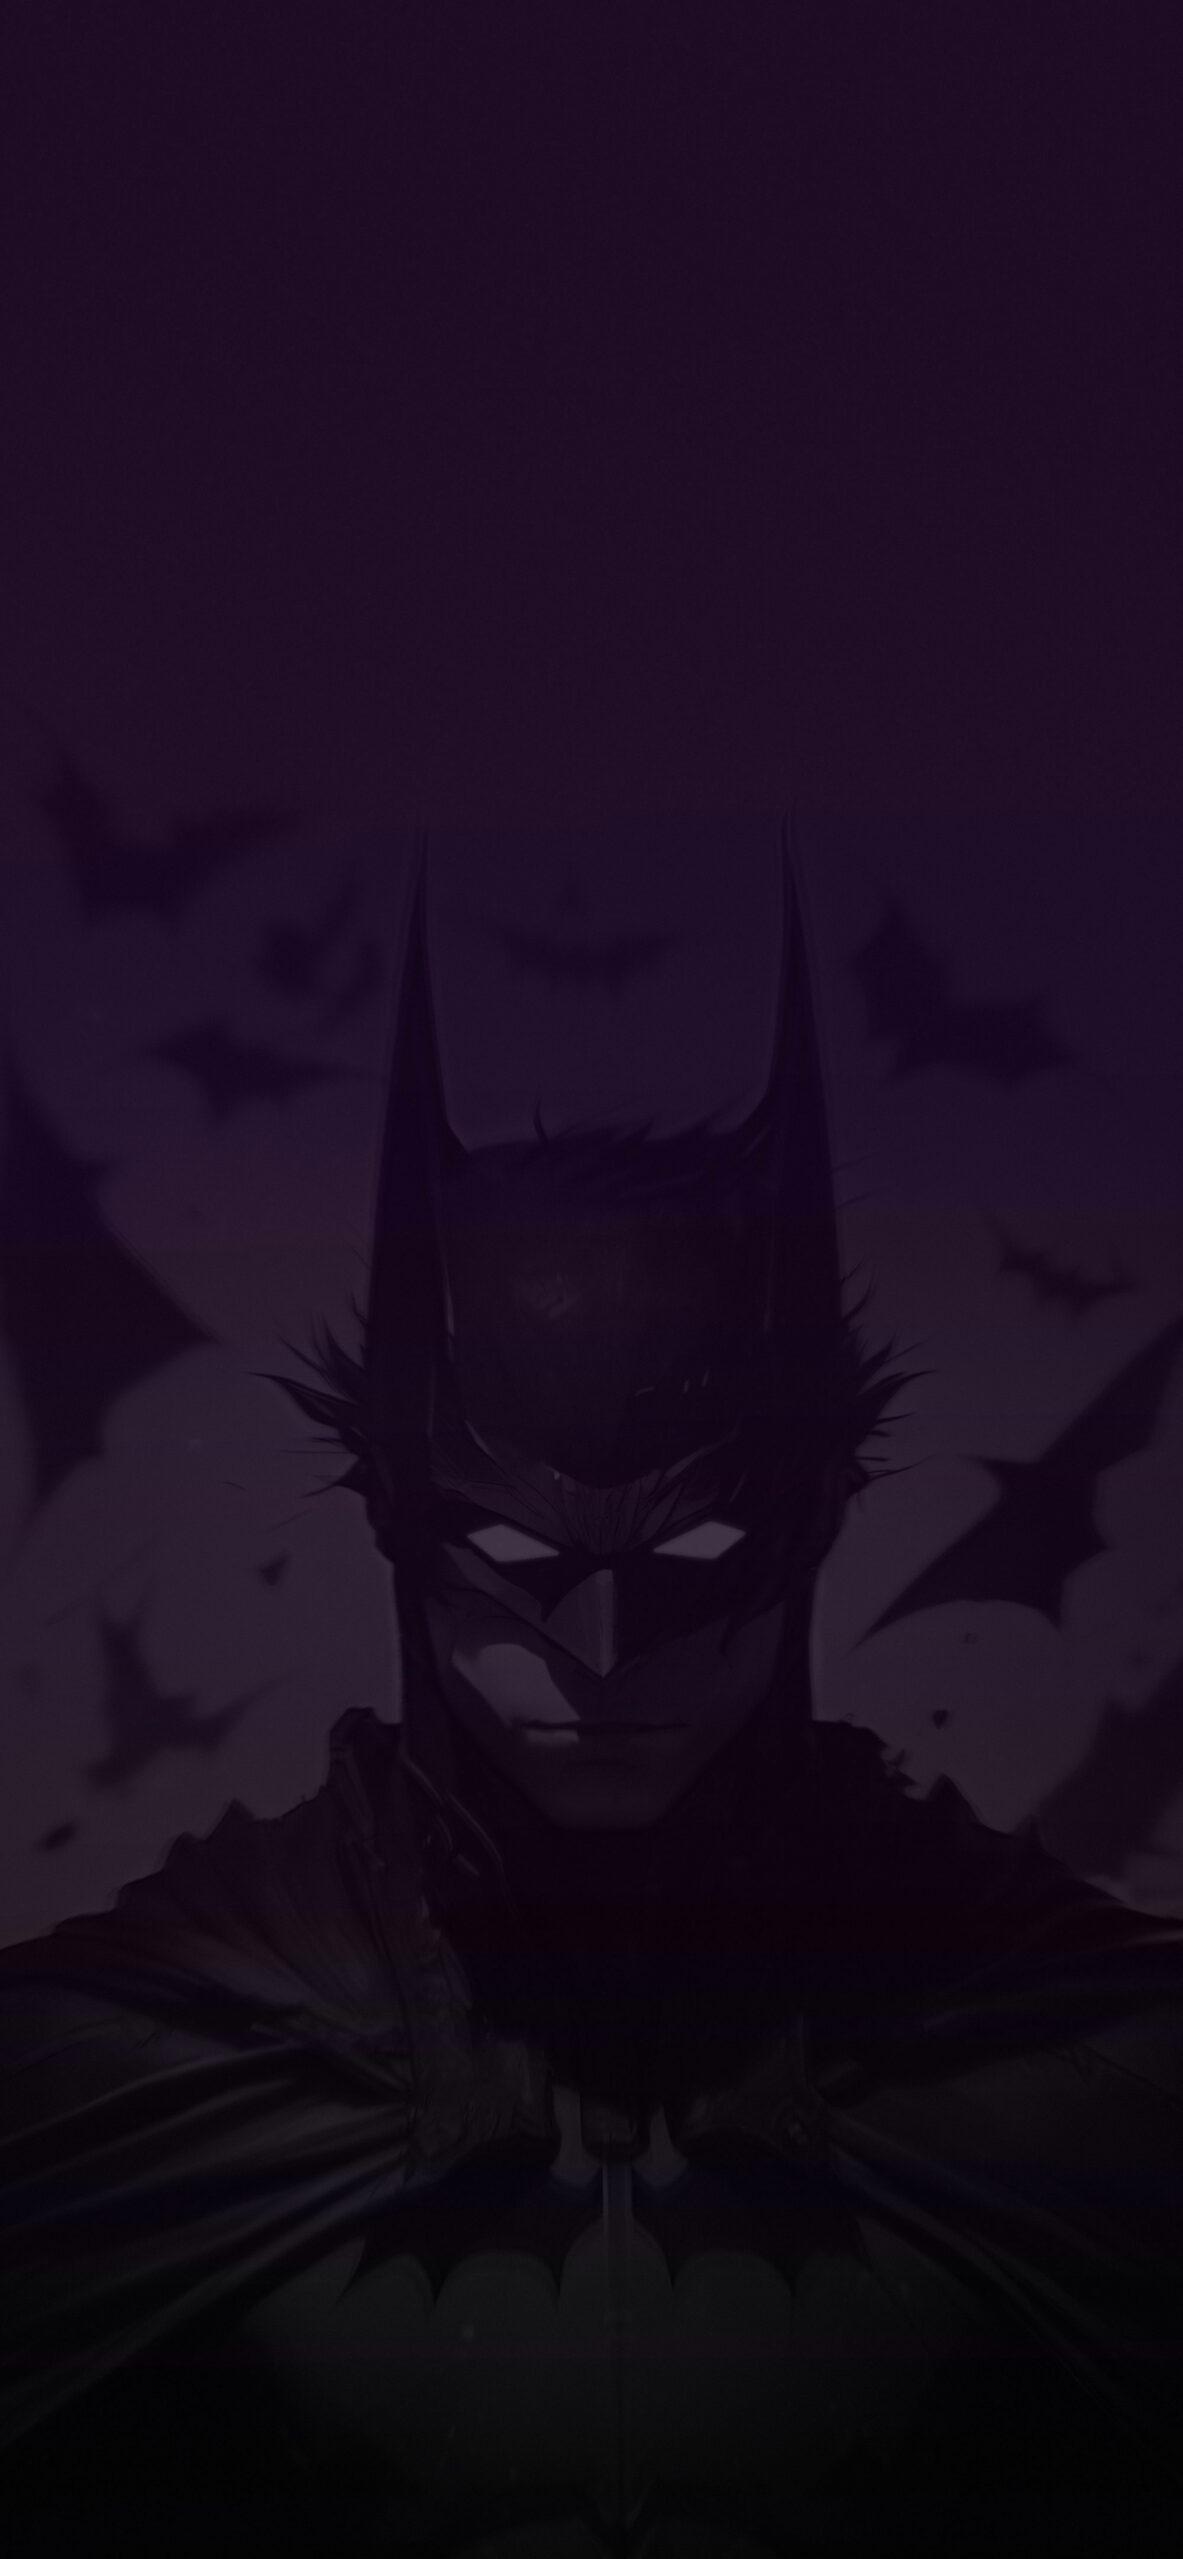 Aesthetic Batman Wallpaper iPhone Dc 4k